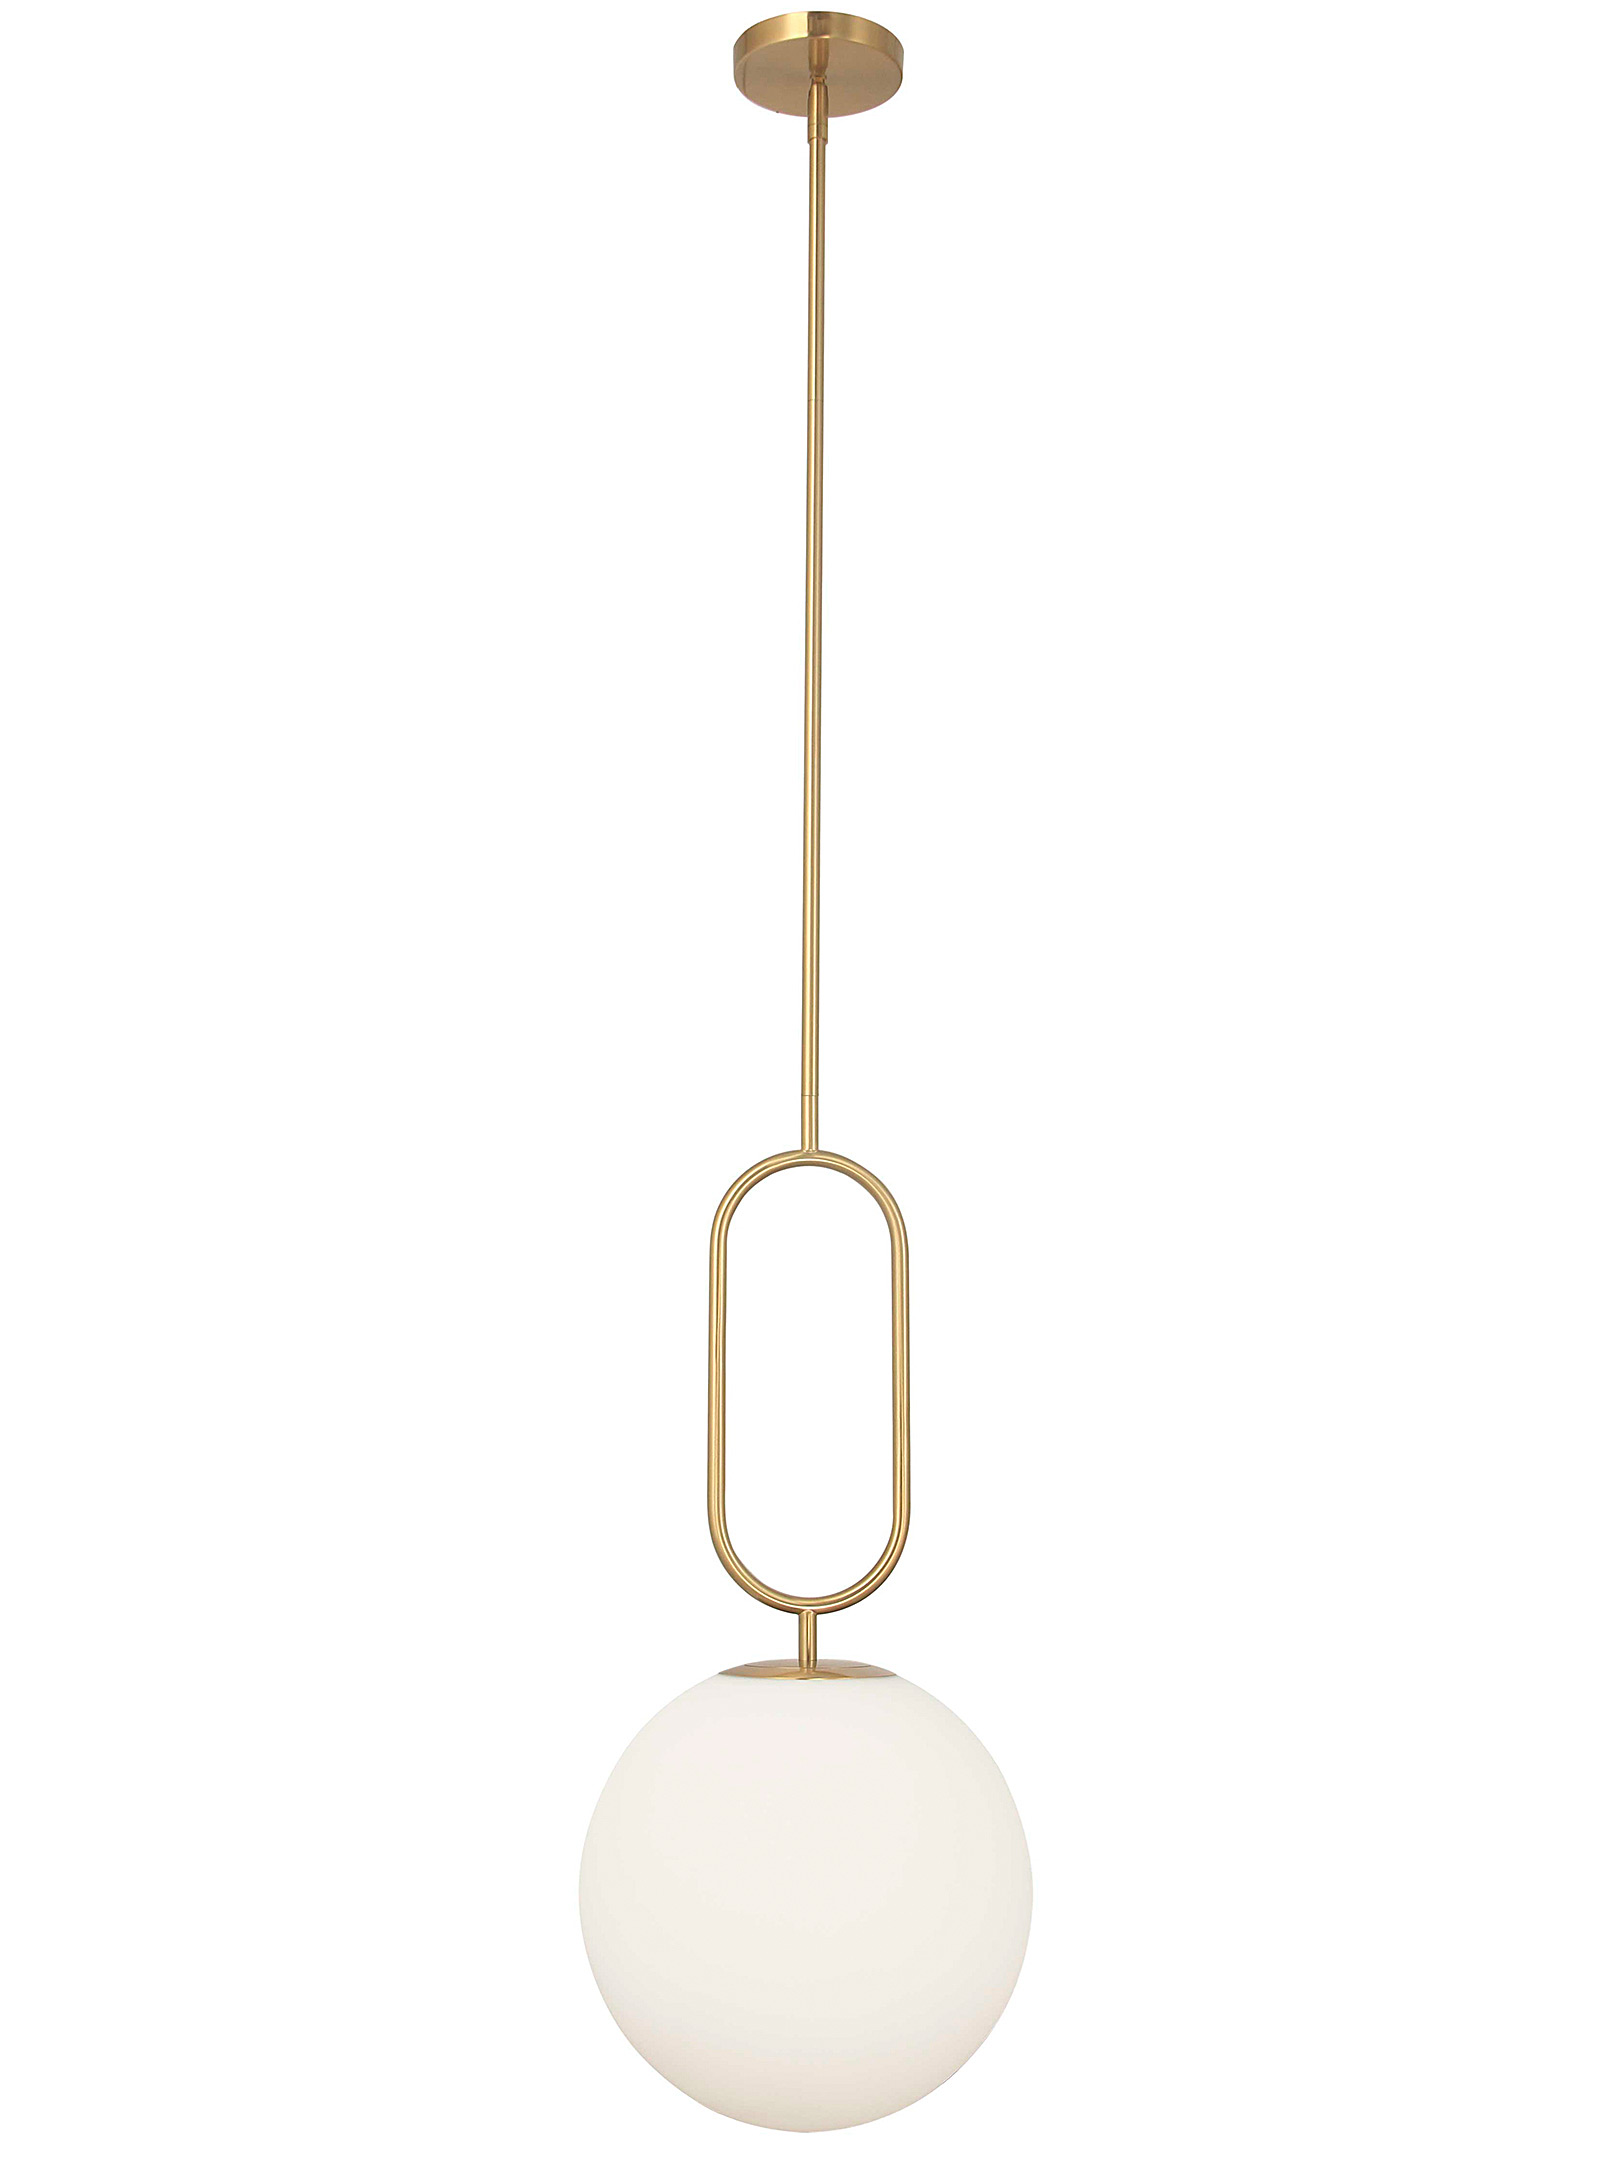 Simons Maison Golden Spherical Symmetry Hanging Lamp In Assorted